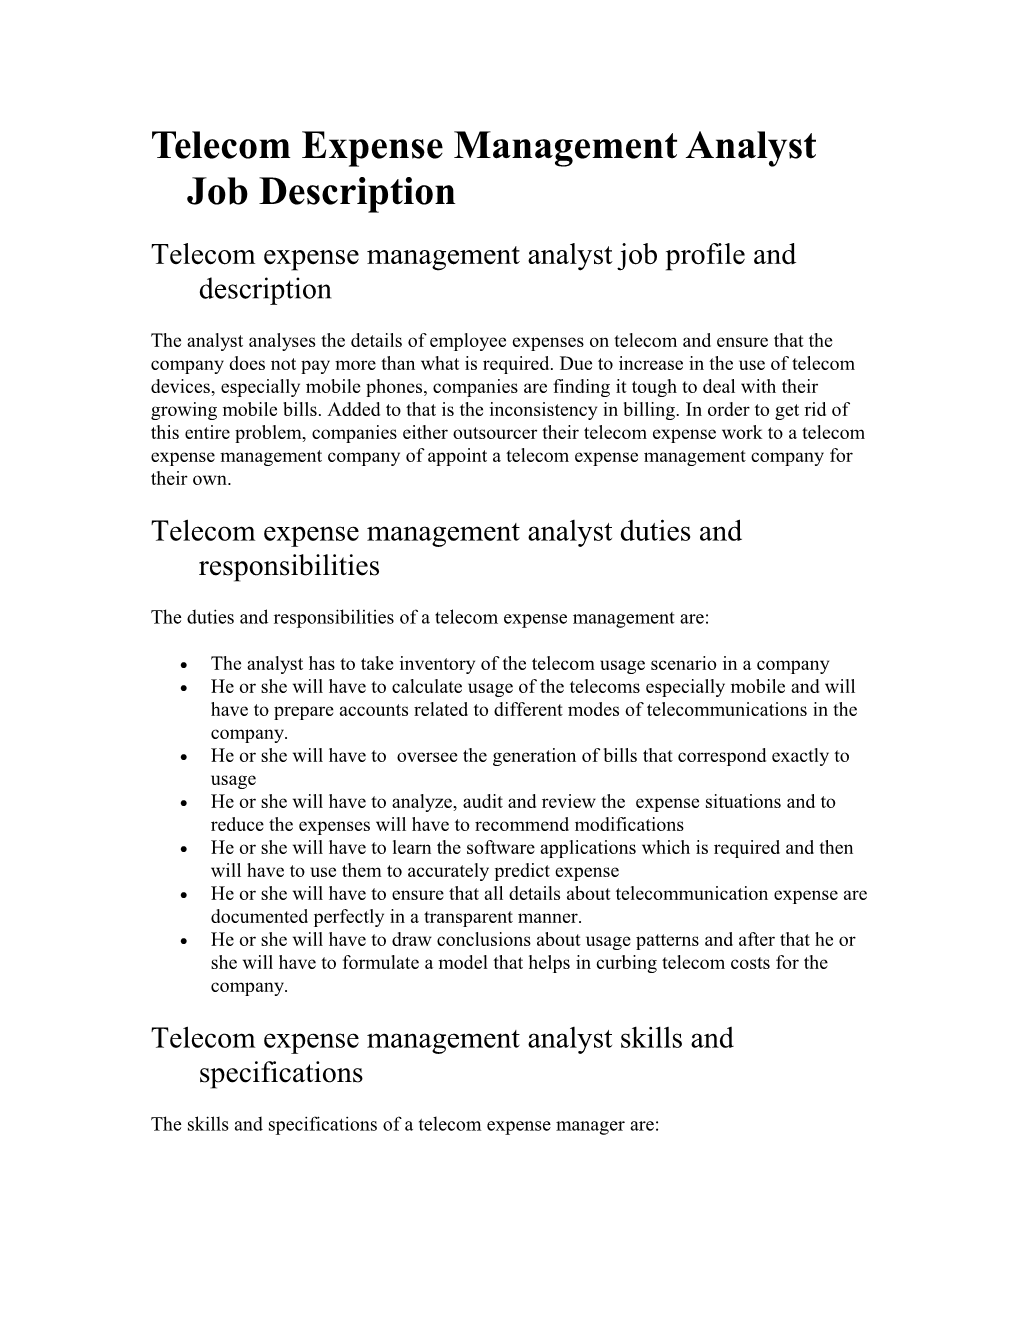 Telecom Expense Management Analyst Job Description